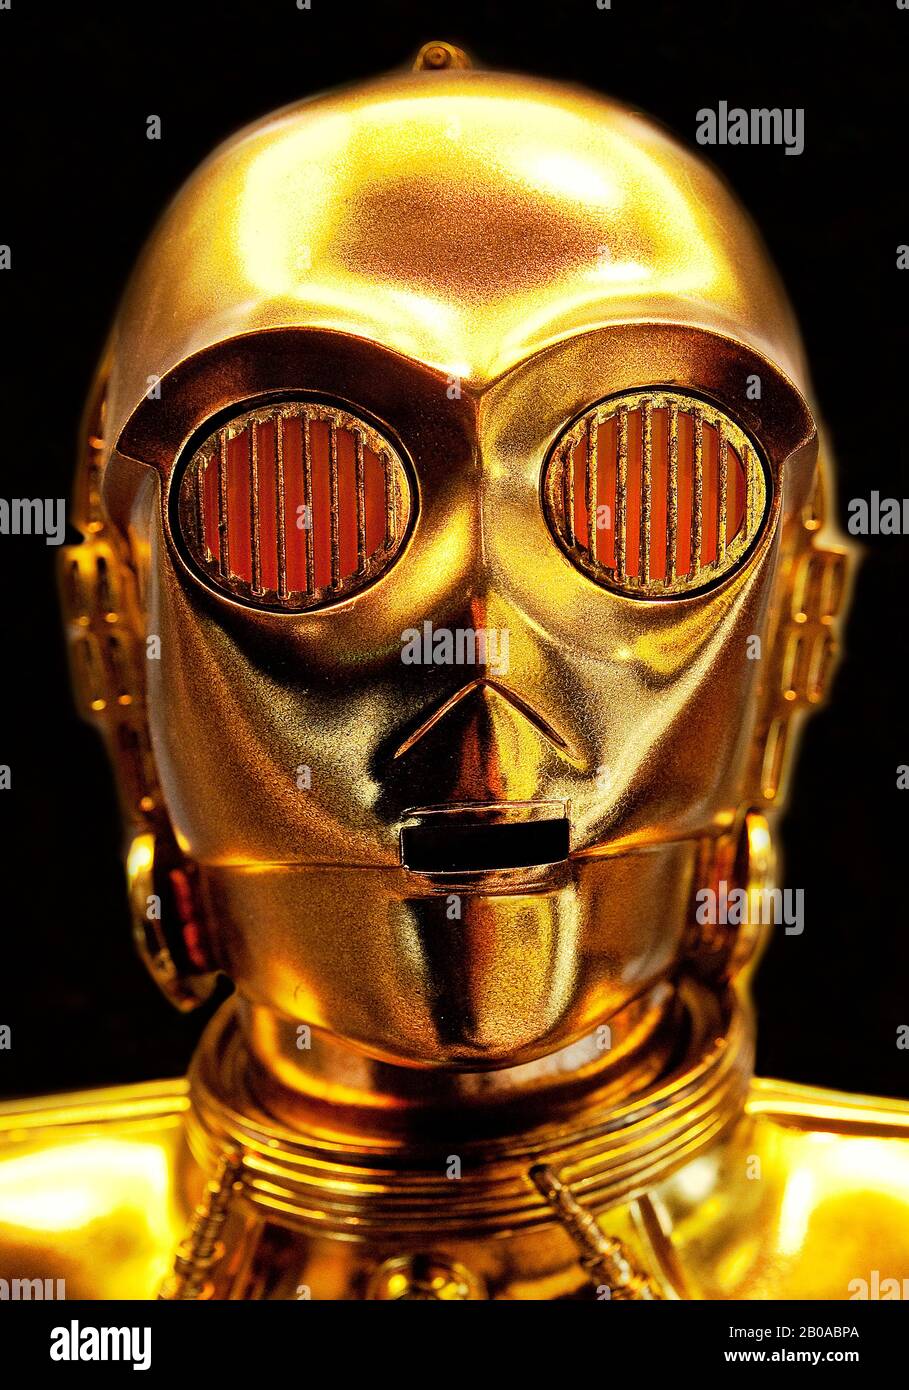 C-3PO, See-Threepio, droide de protocolo, carácter robot humanoide de Star Wars Foto de stock